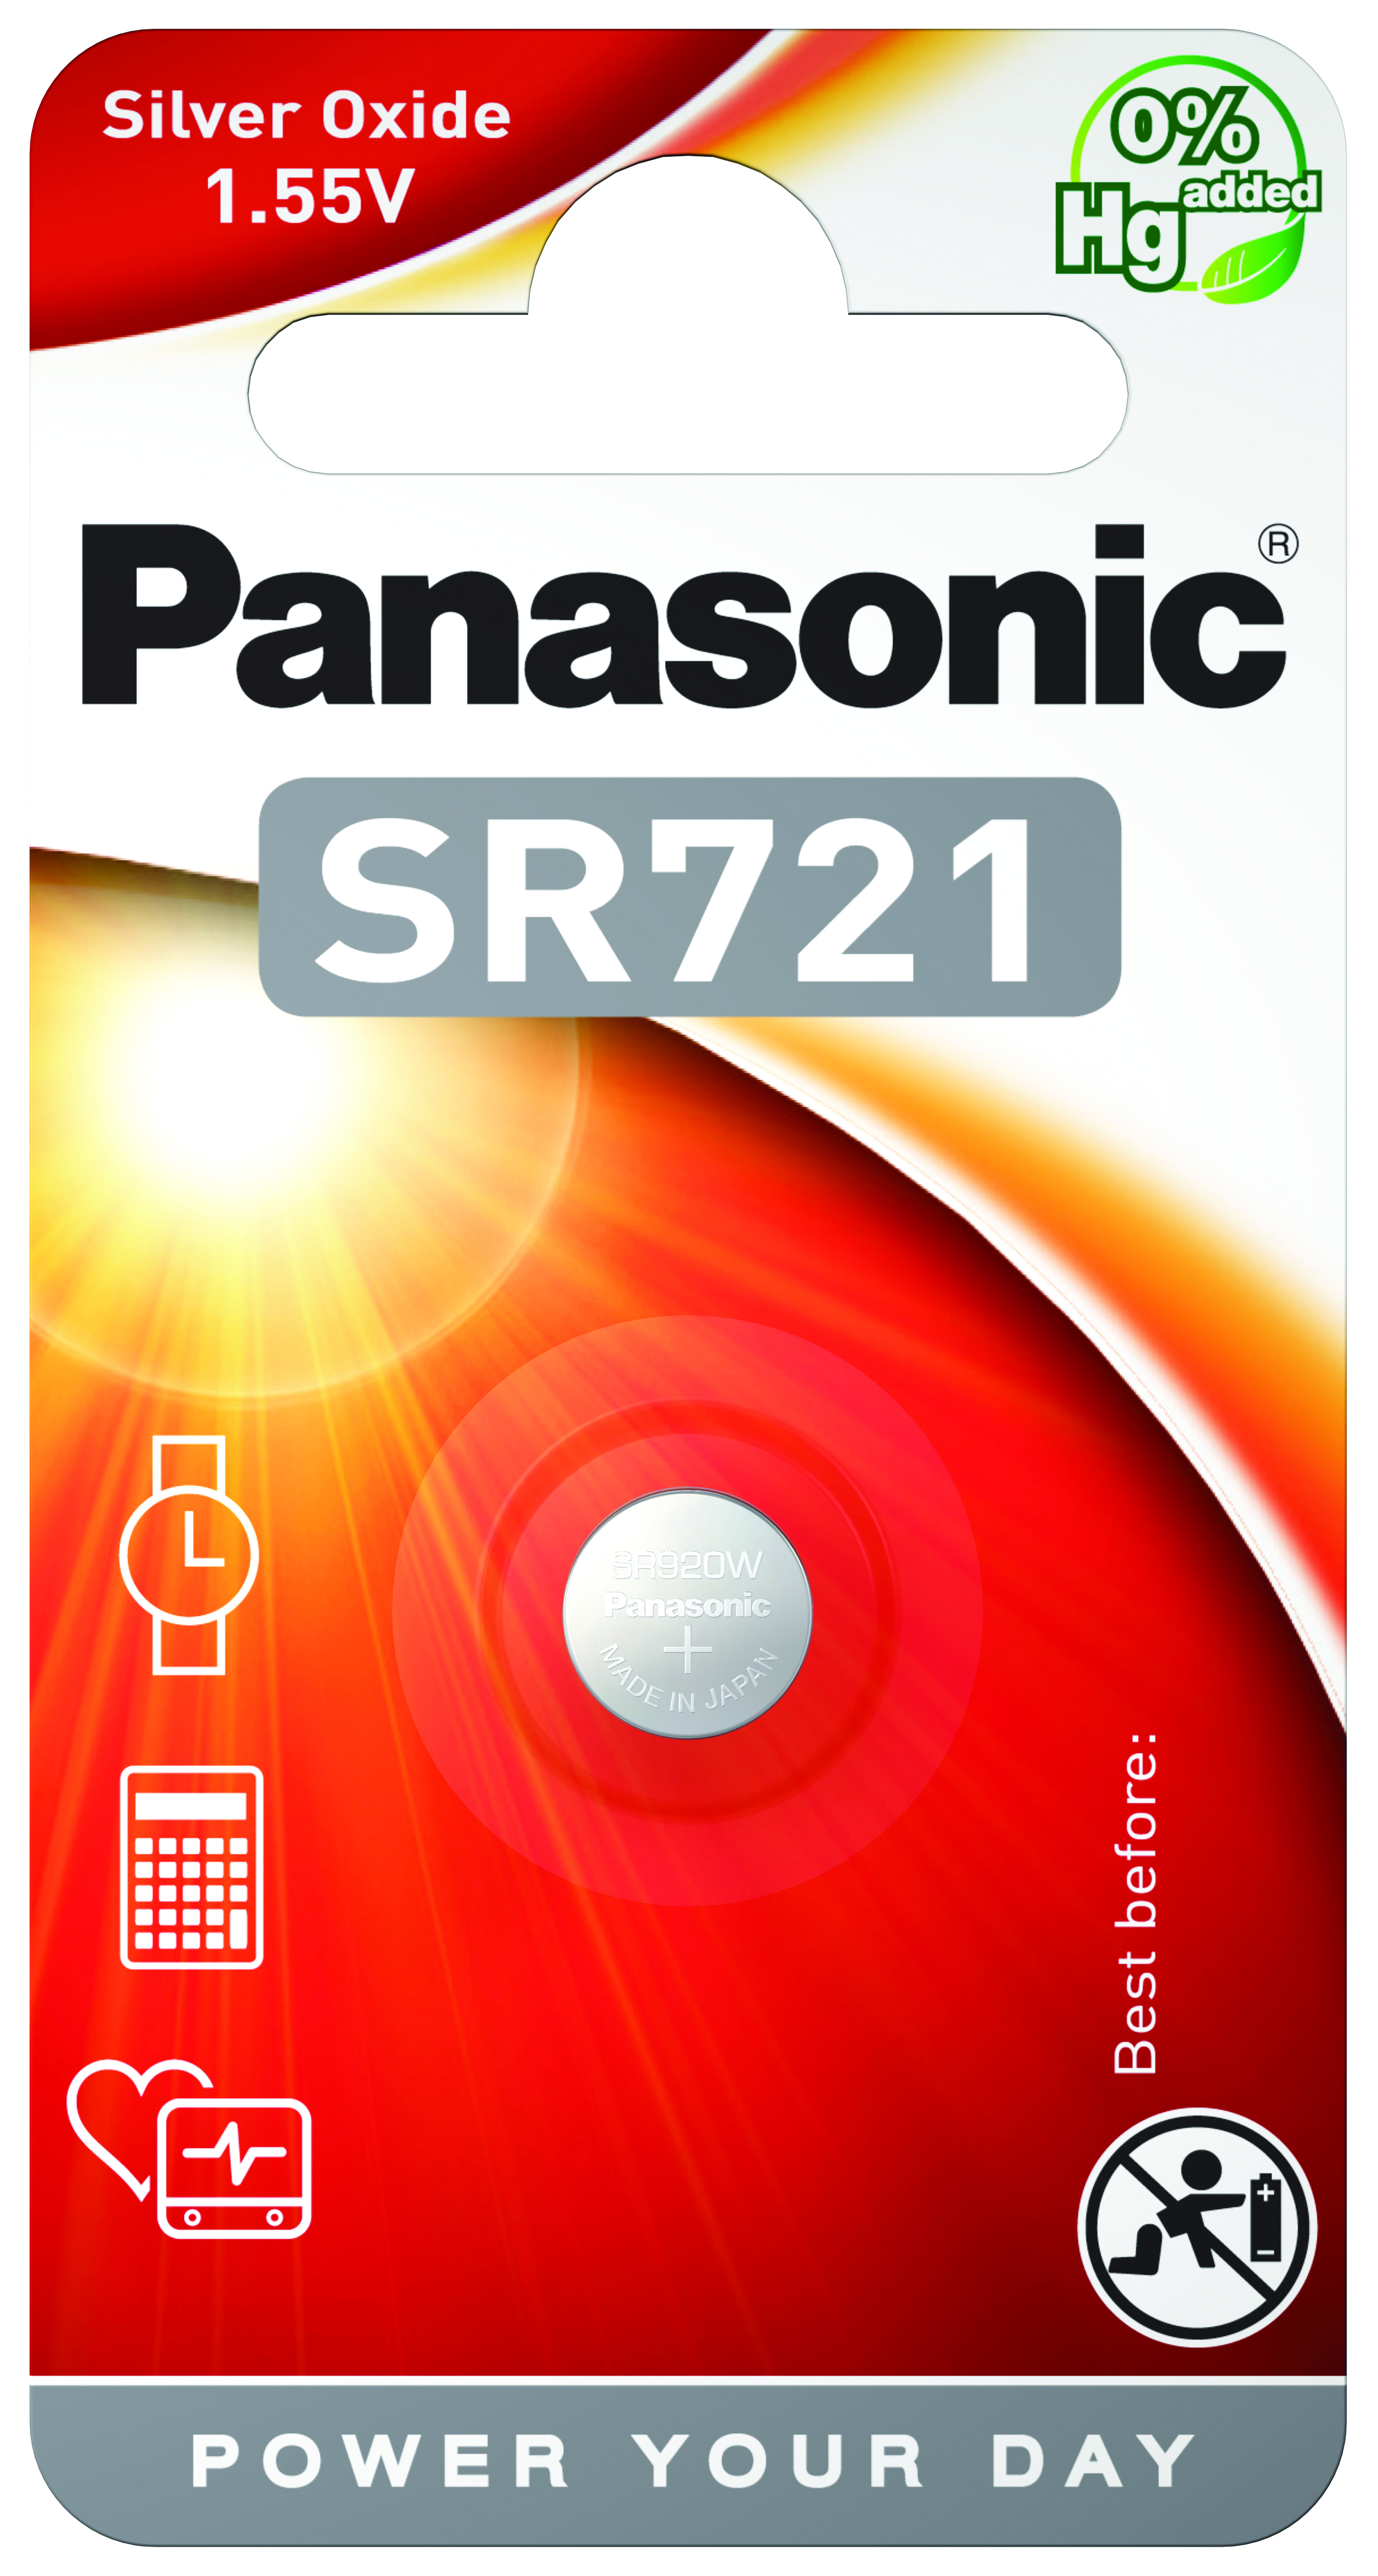 Panasonic SR721 (Silberoxid/Uhrenbatterien)